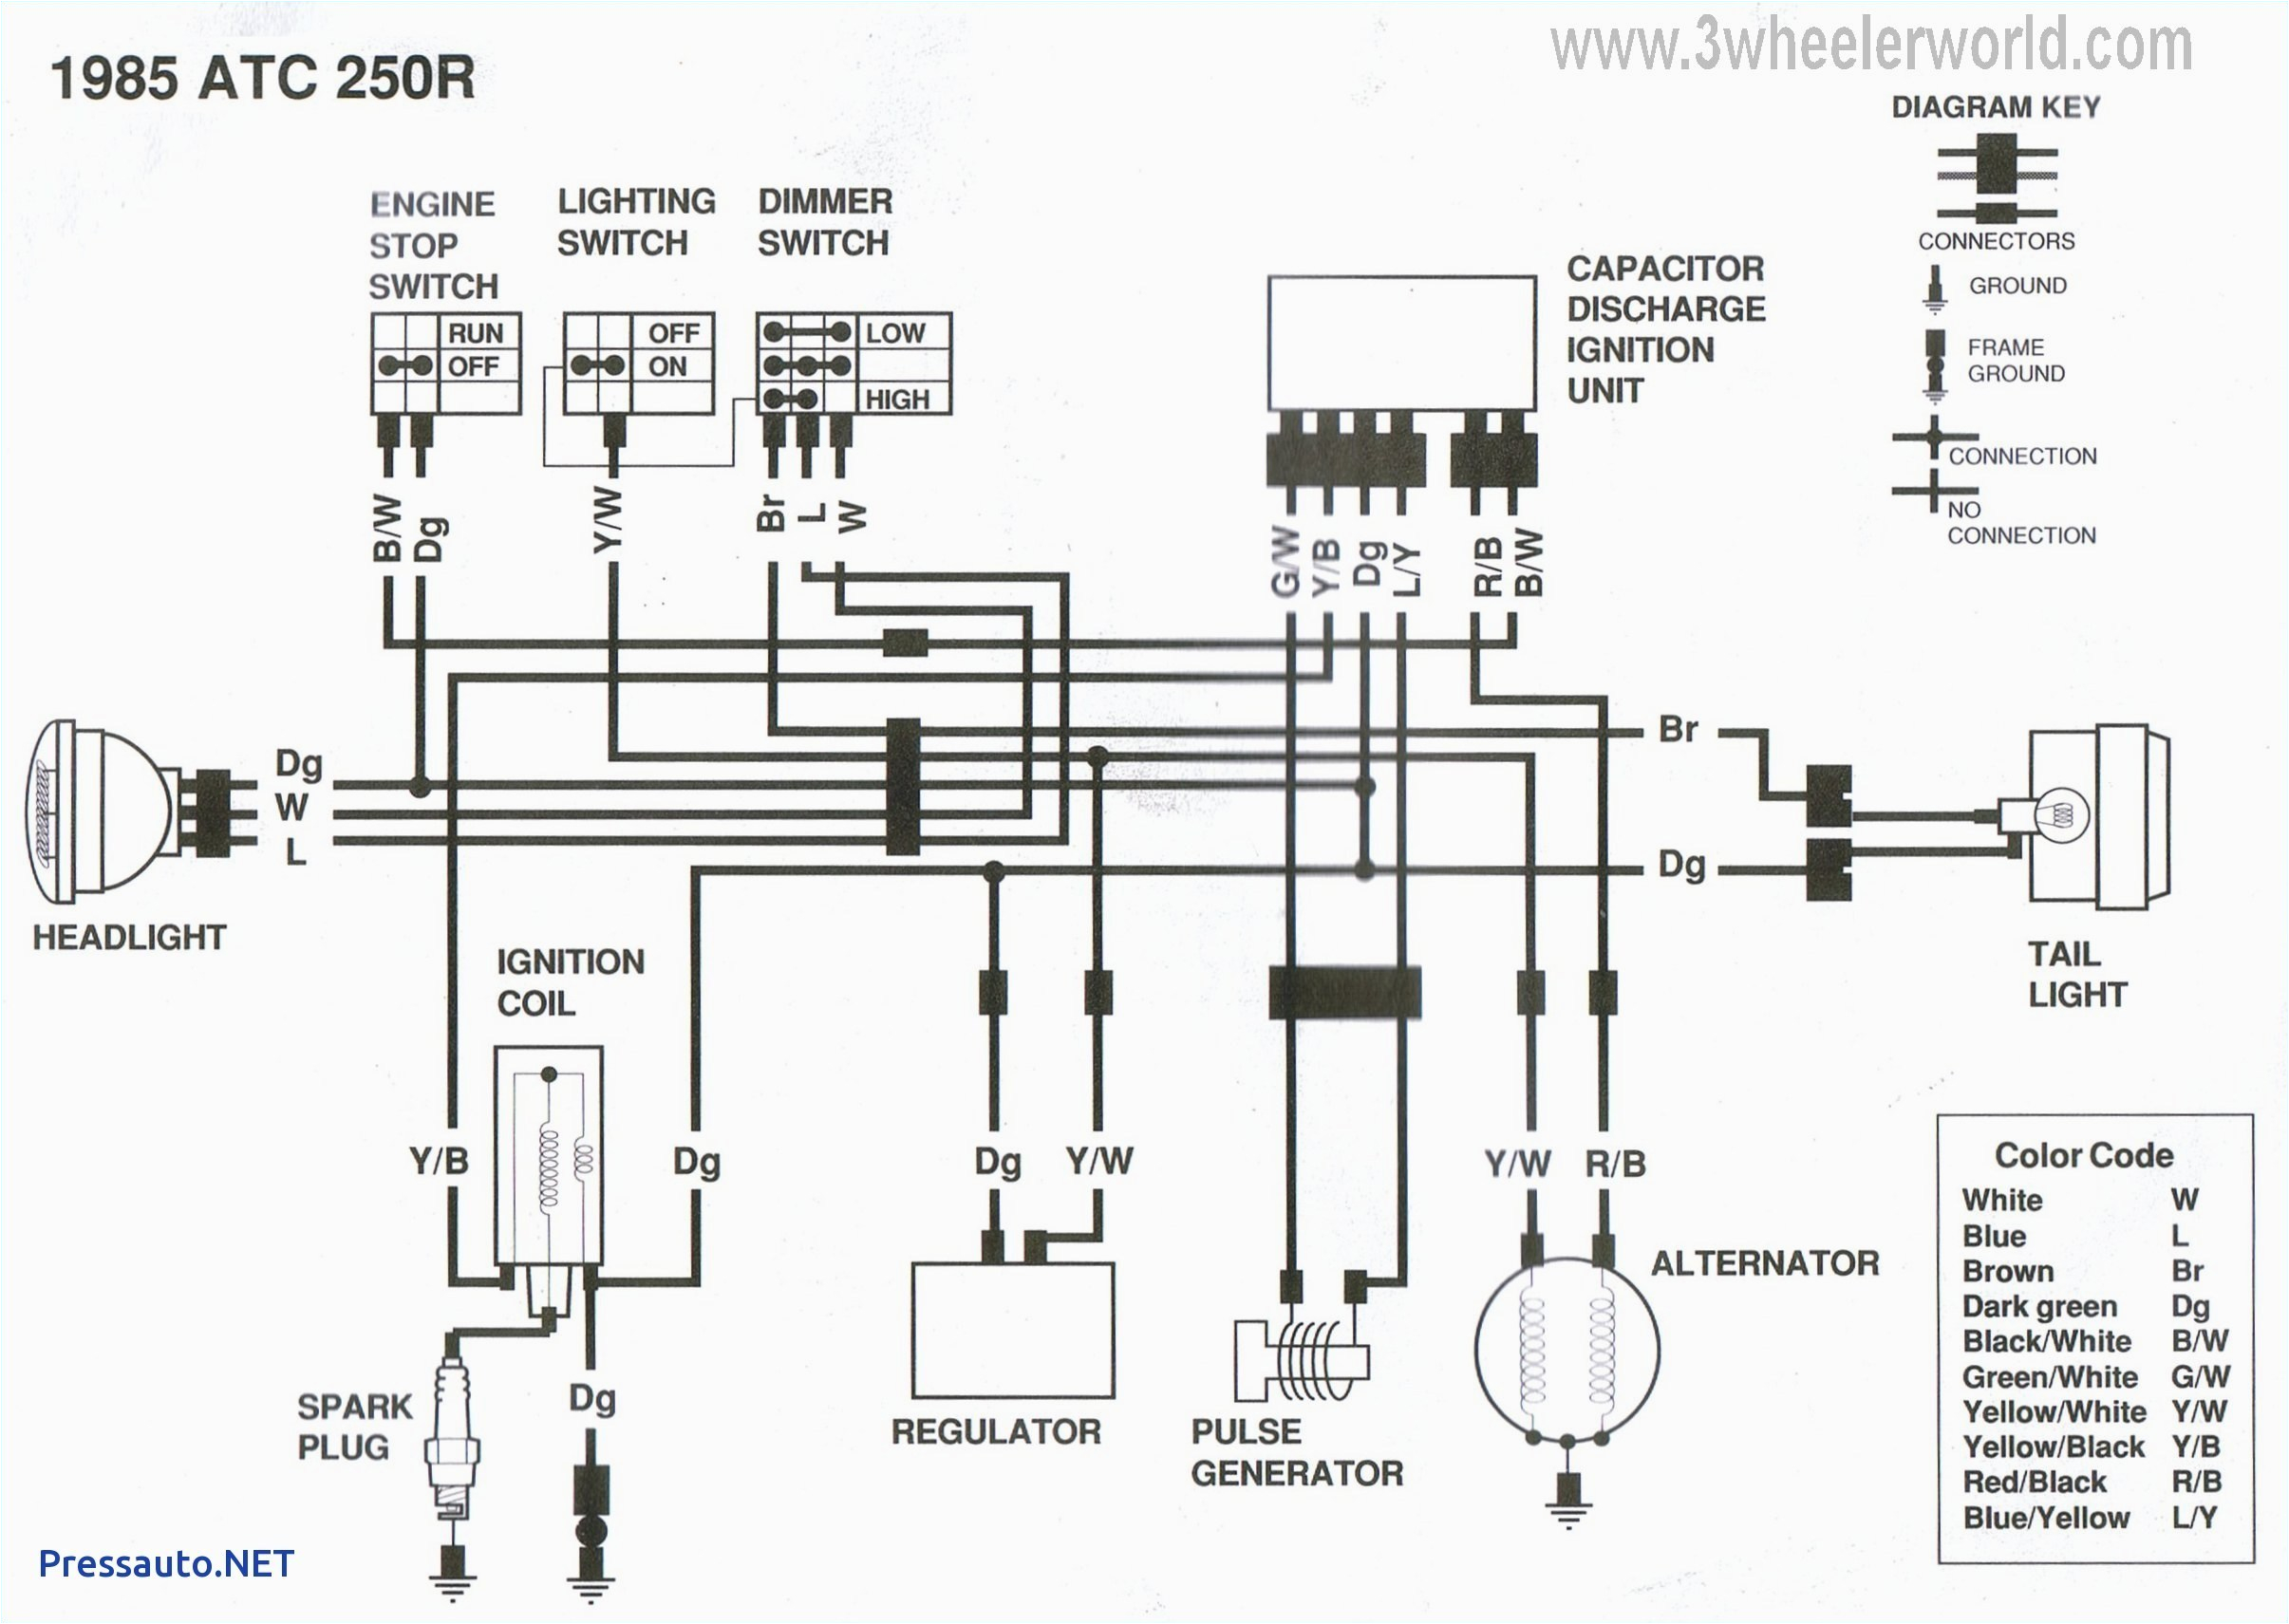 chopcult 3981 yamaha xj 650 wiring help needed wiring diagram page chopcult 3981 yamaha xj 650 wiring help needed